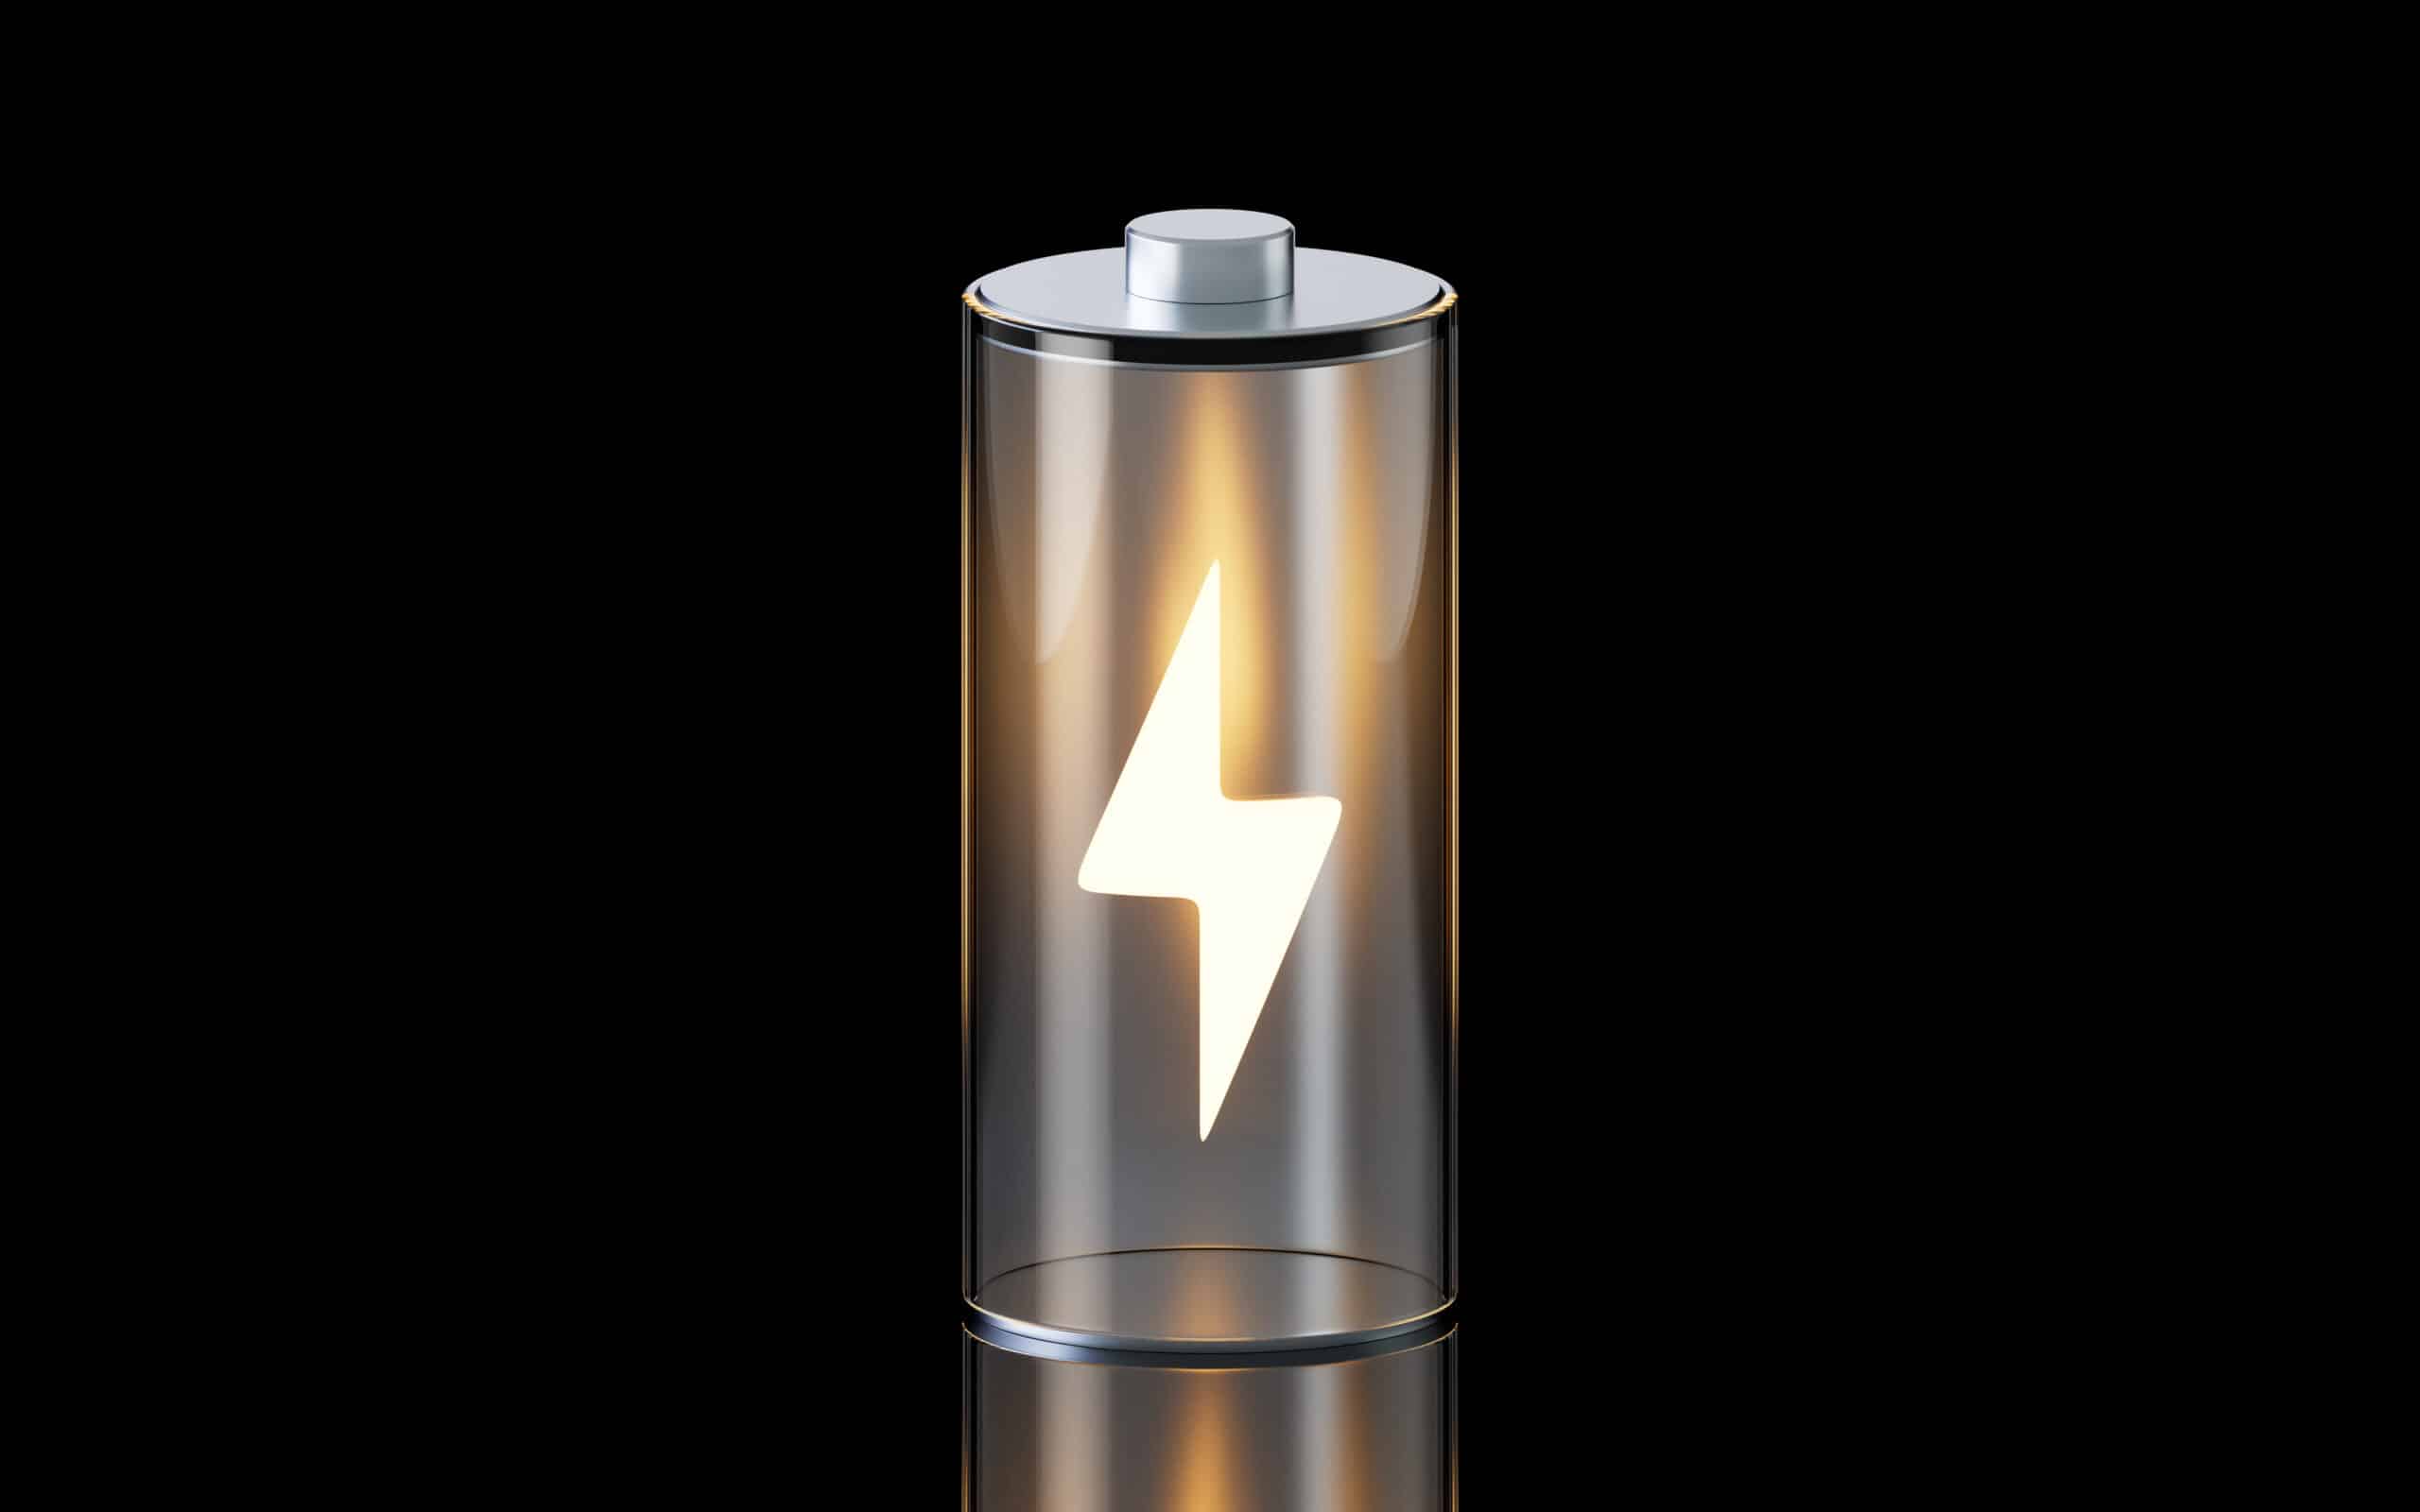 theprecisiontools.com : Does charging to 80% extend battery life?